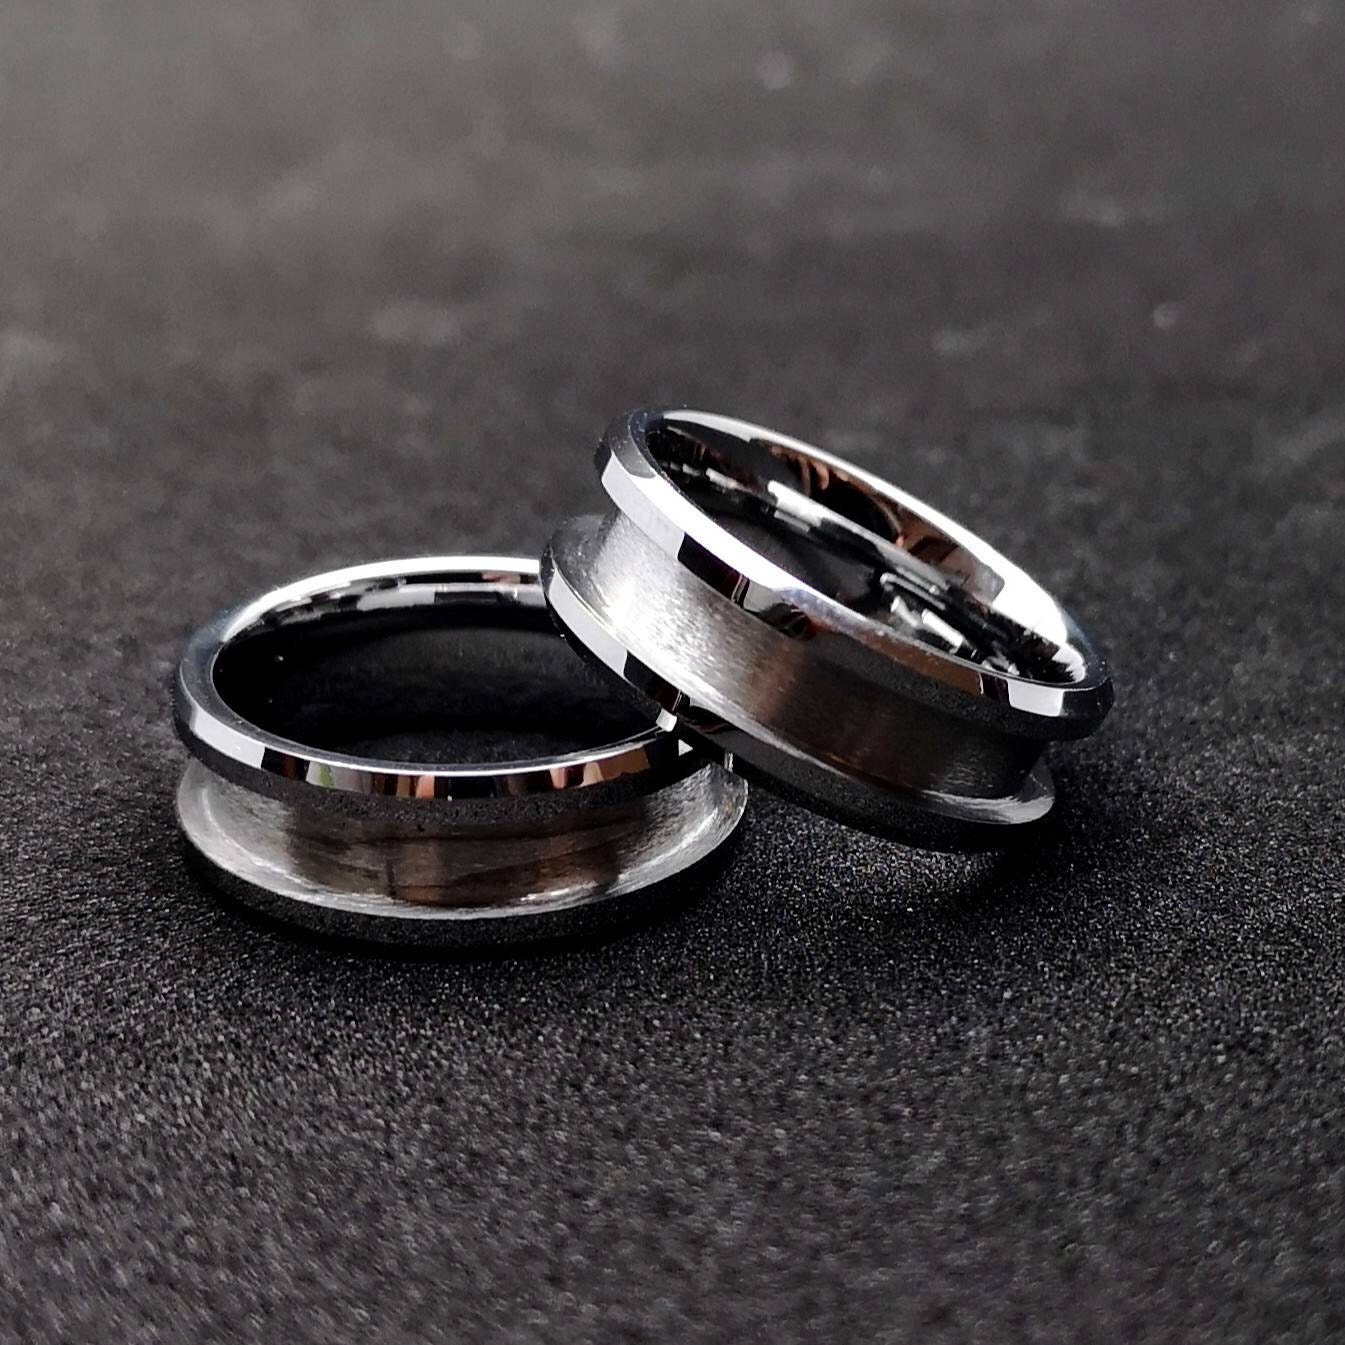 Stainless Steel Expanding Ring Mandrel, Ring Making Supplies, Ring